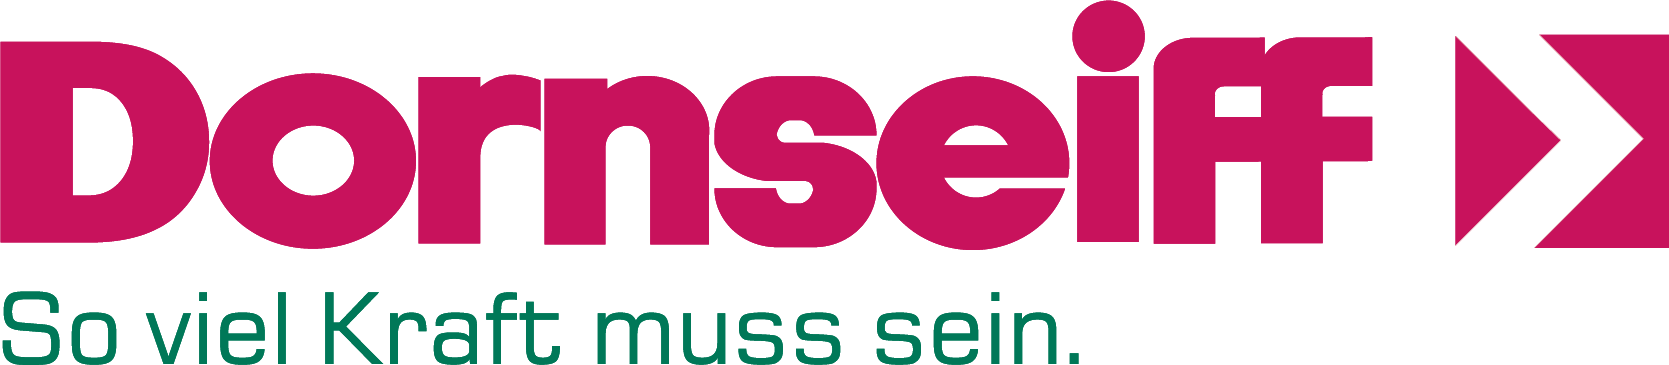 Dornseiff Logo